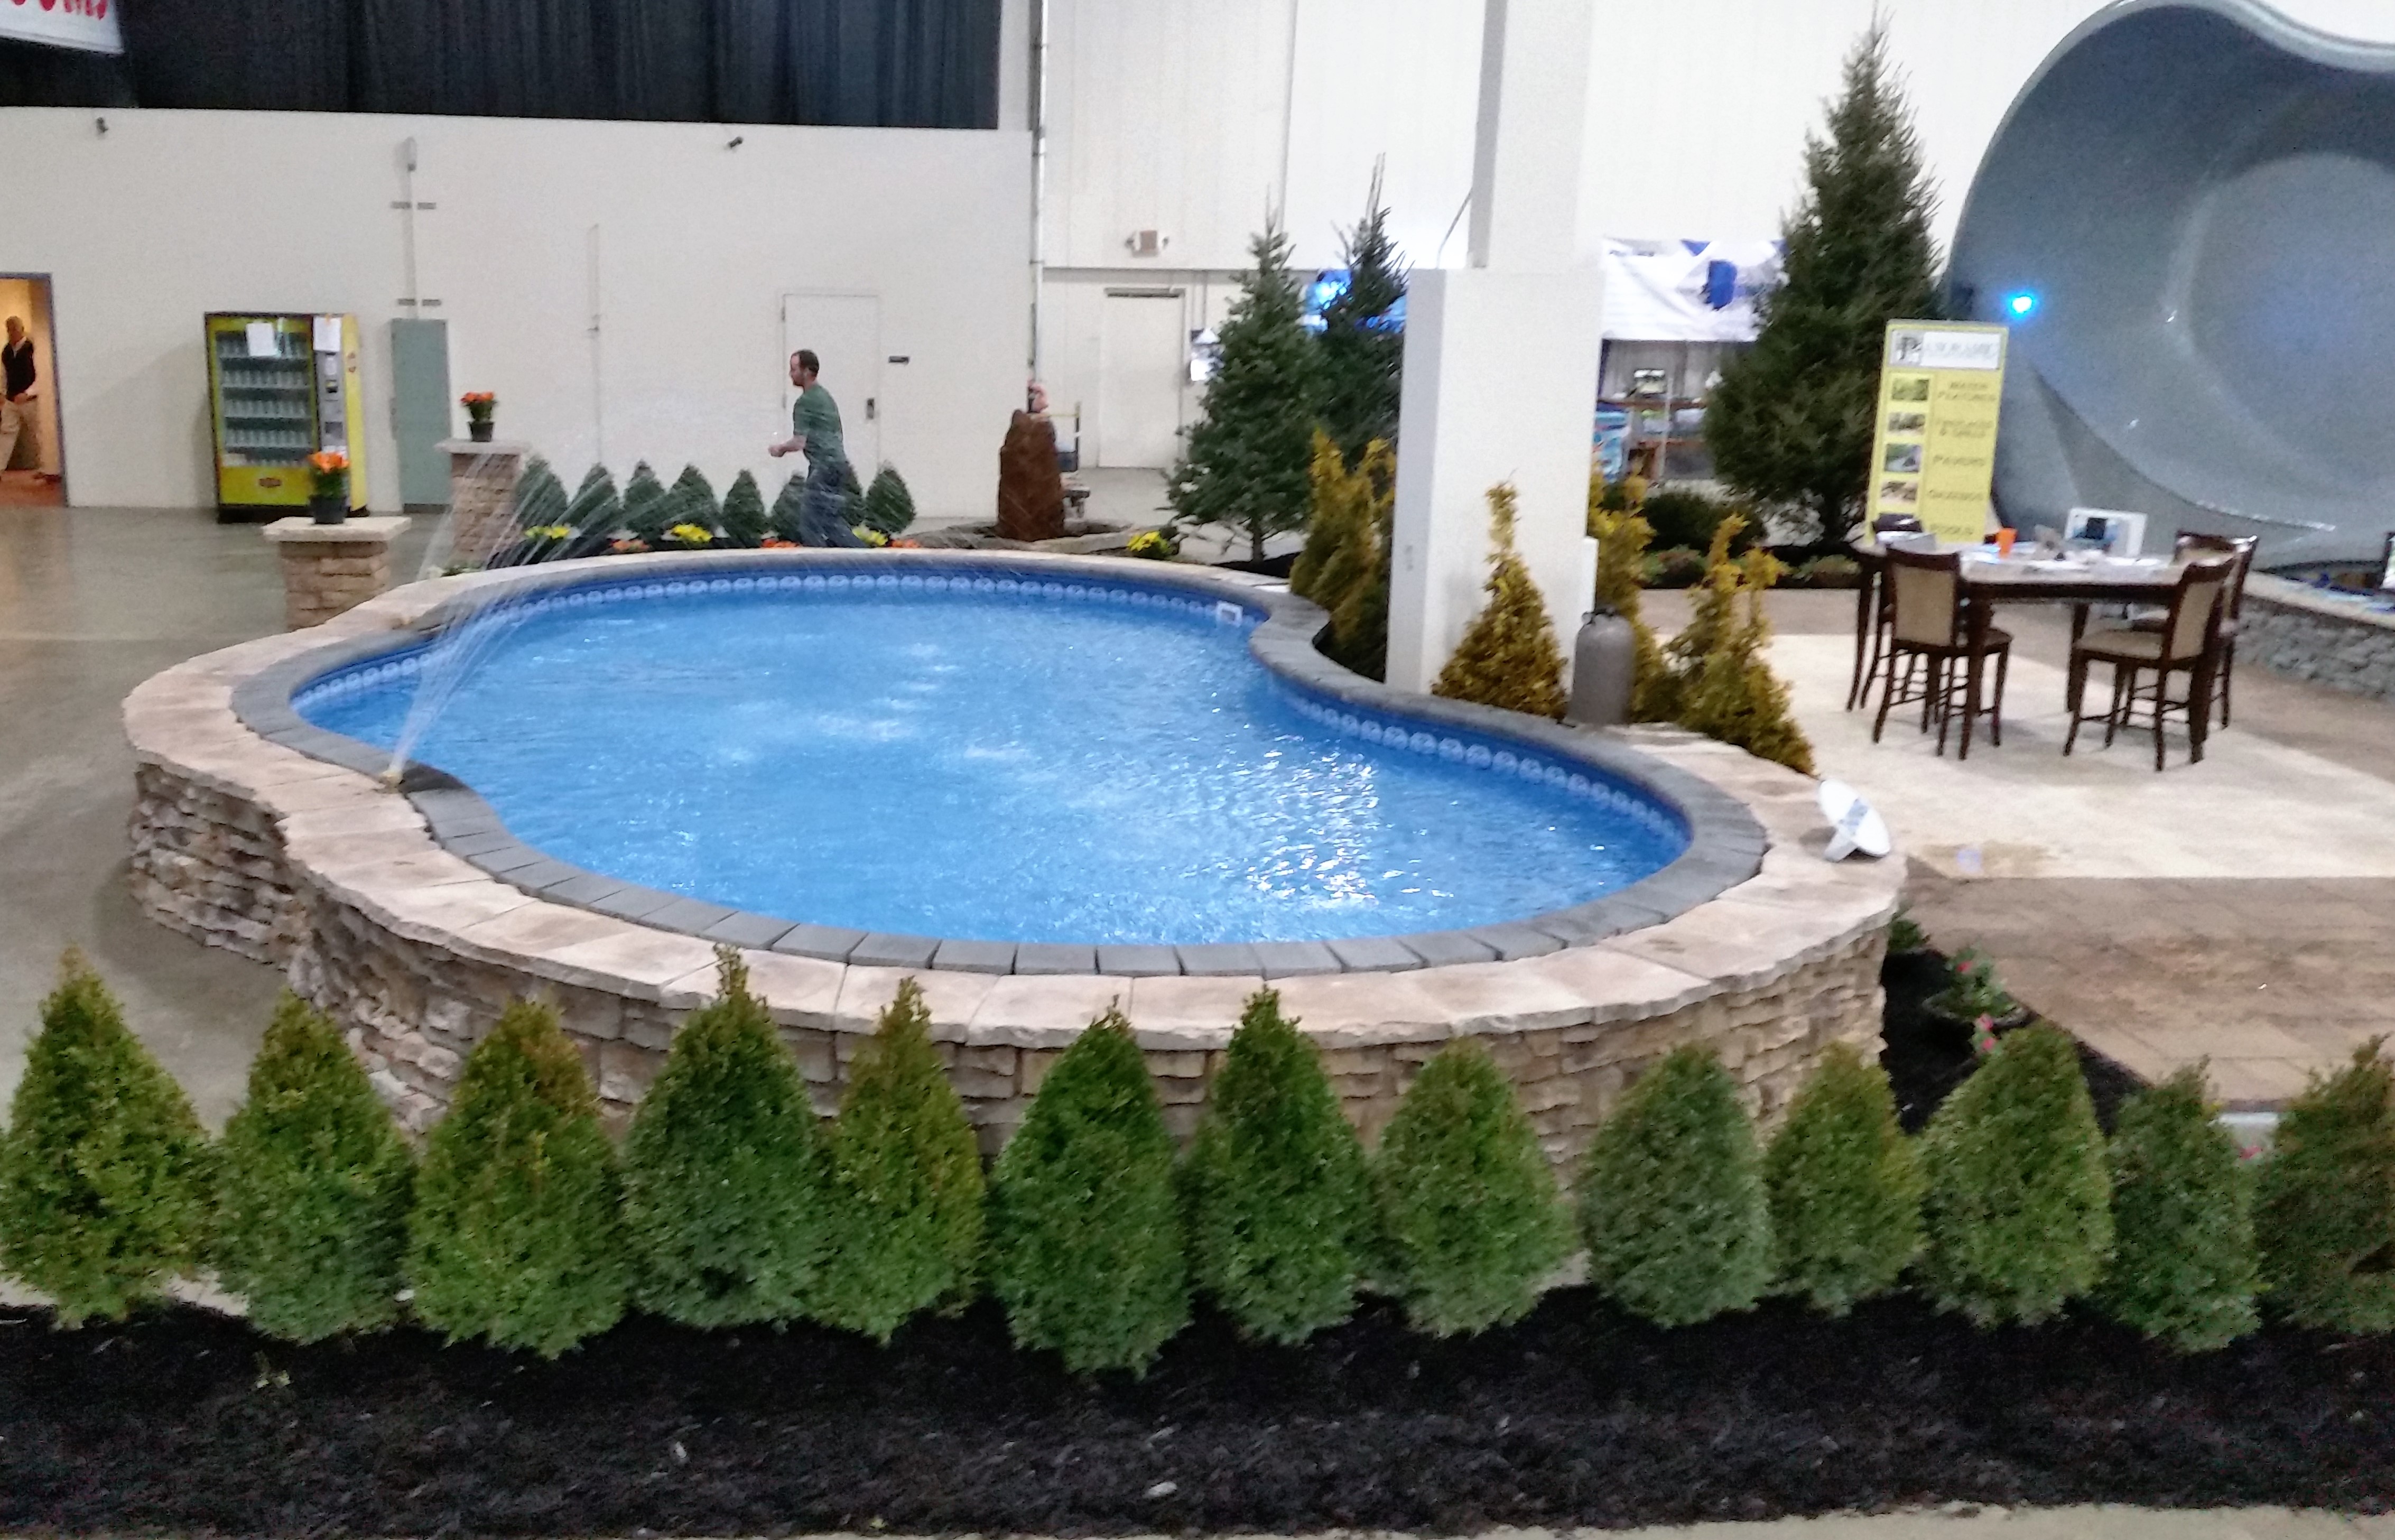 Novi Pool and Spa Show ⋆ Blue Hawaiian Pools of Michigan